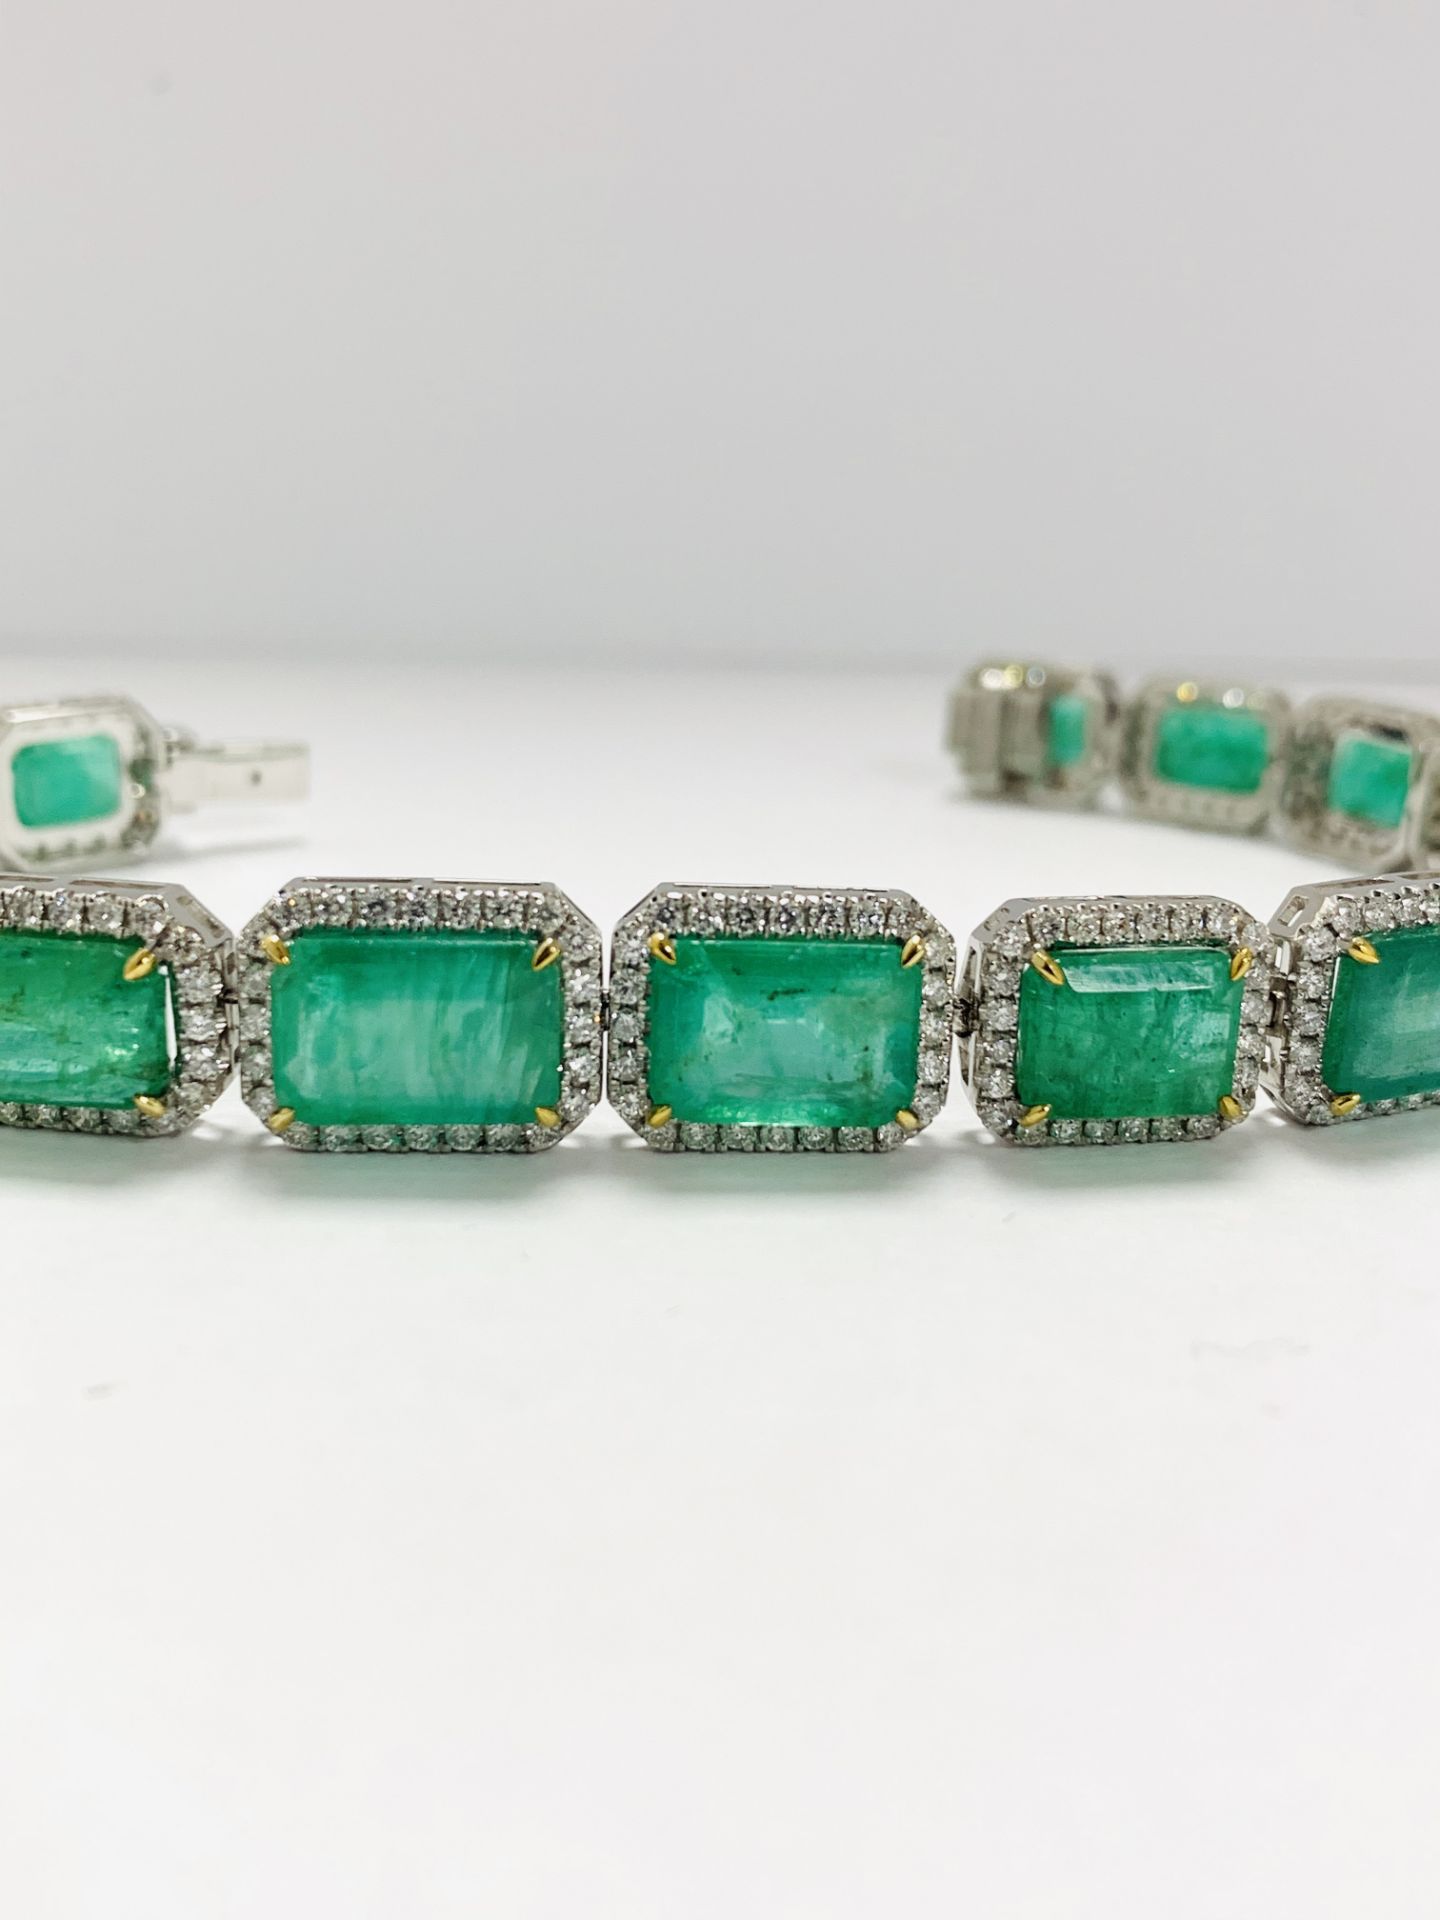 Platinum Emerald and Diamond Necklace - Image 5 of 18